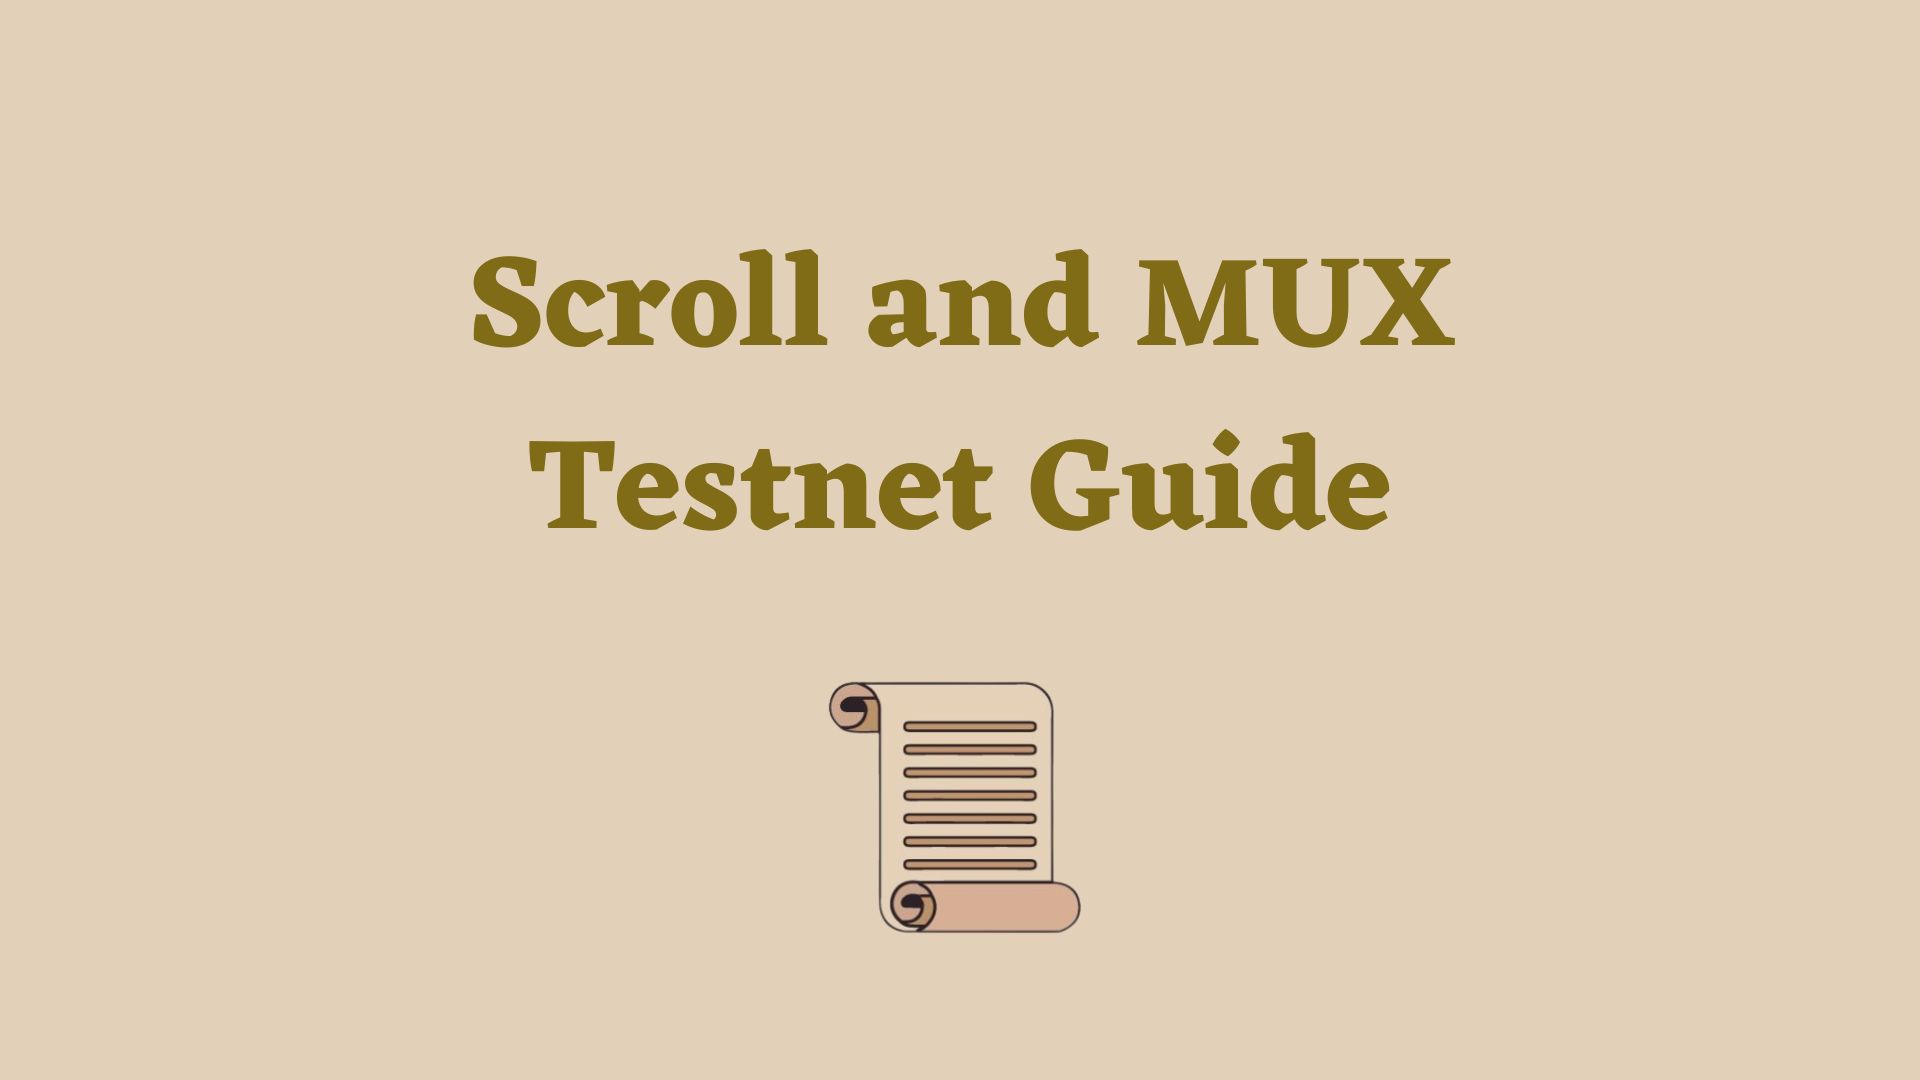 Scroll Testnet Guide.jpg